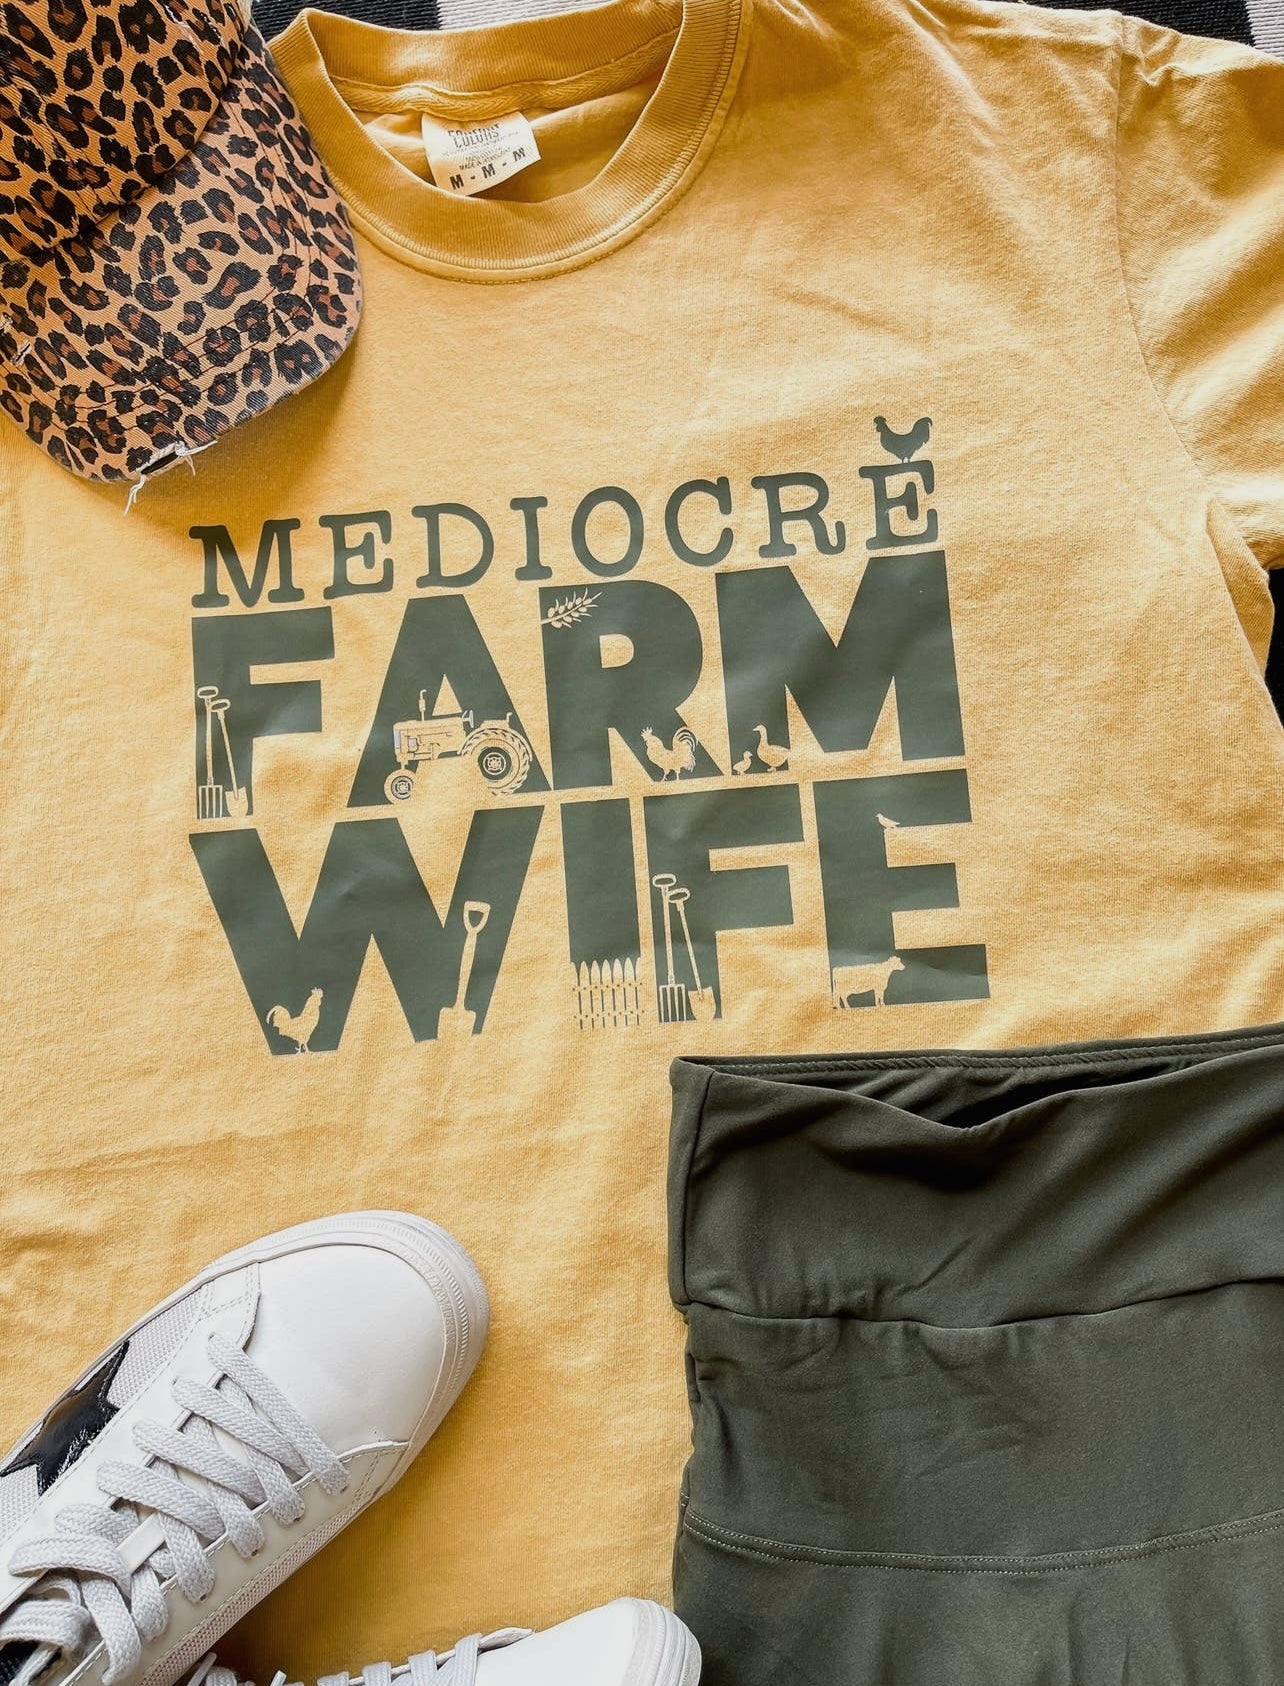 Mediocre Farm Wife